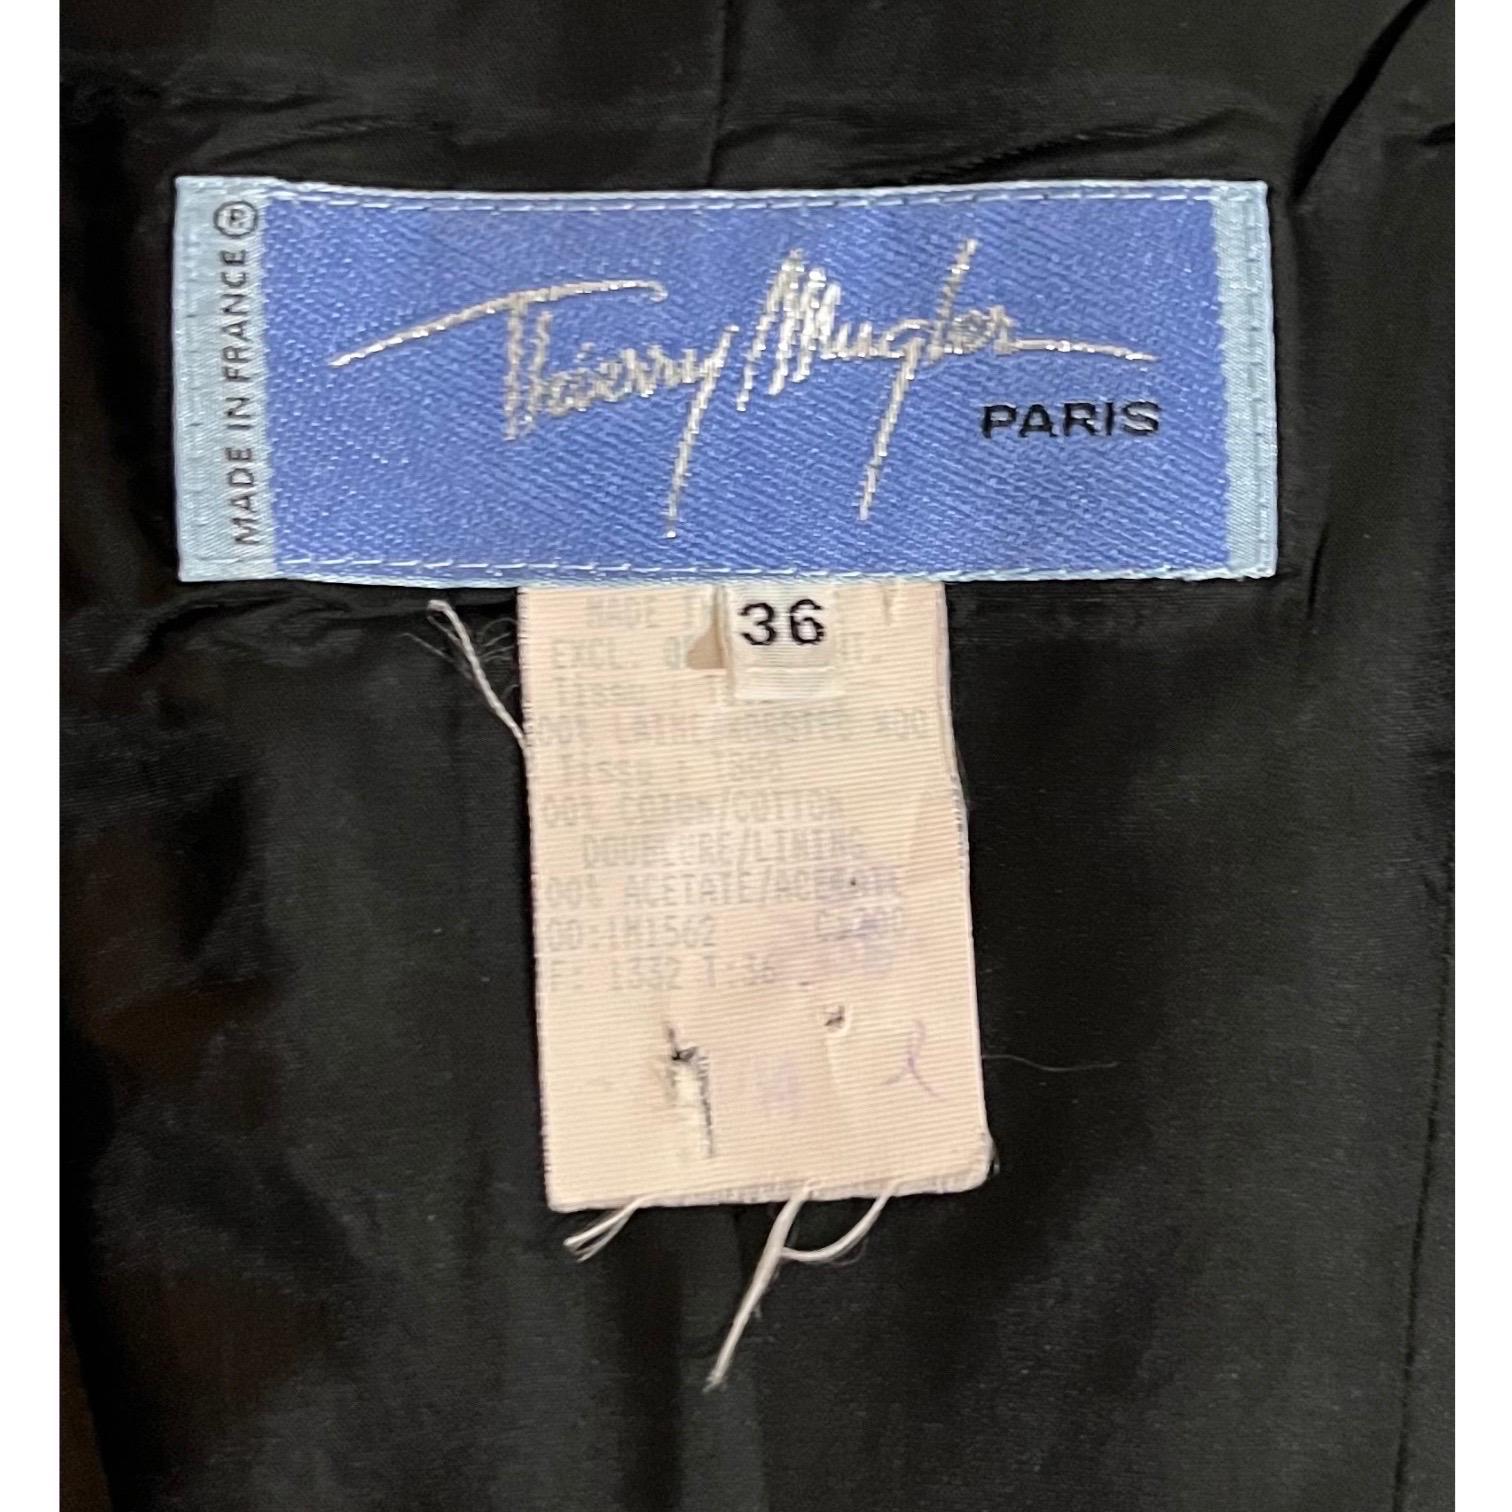 S/S 1996 Thierry Mugler Sculptural Runway Museum Skirt Suit Ensemble For Sale 11